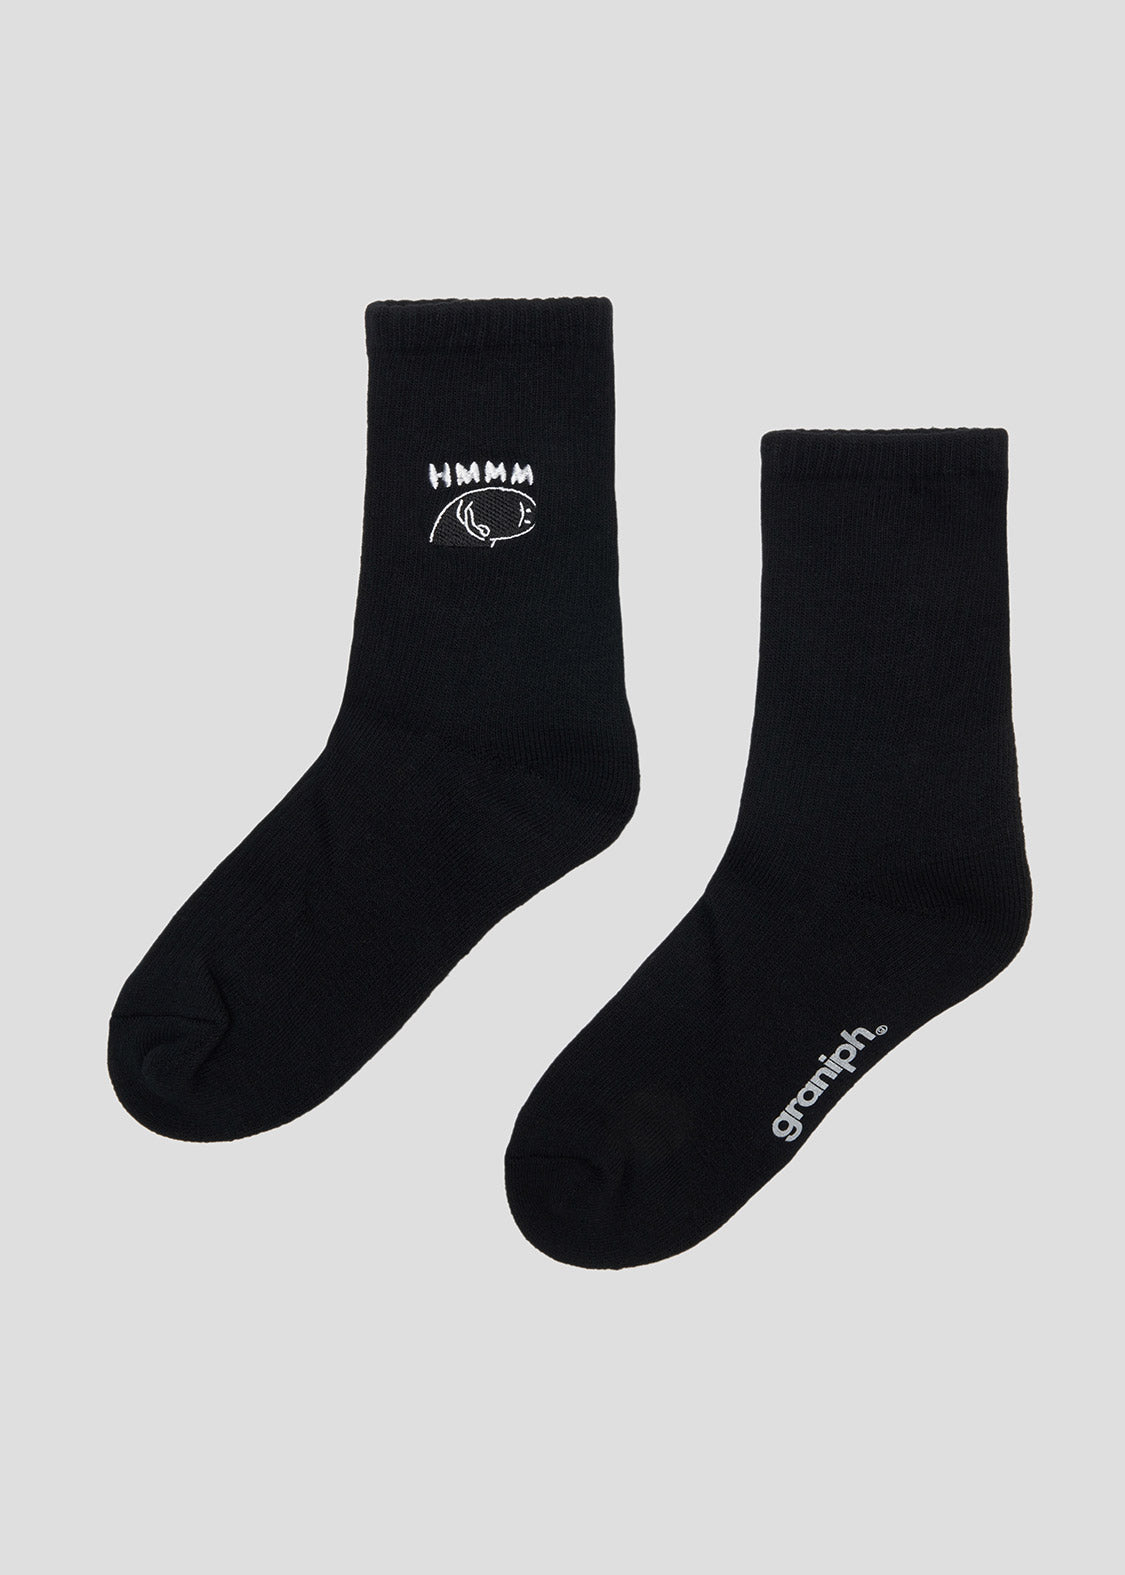 Middle Socks (Deep Think Beautiful Shadow Black)